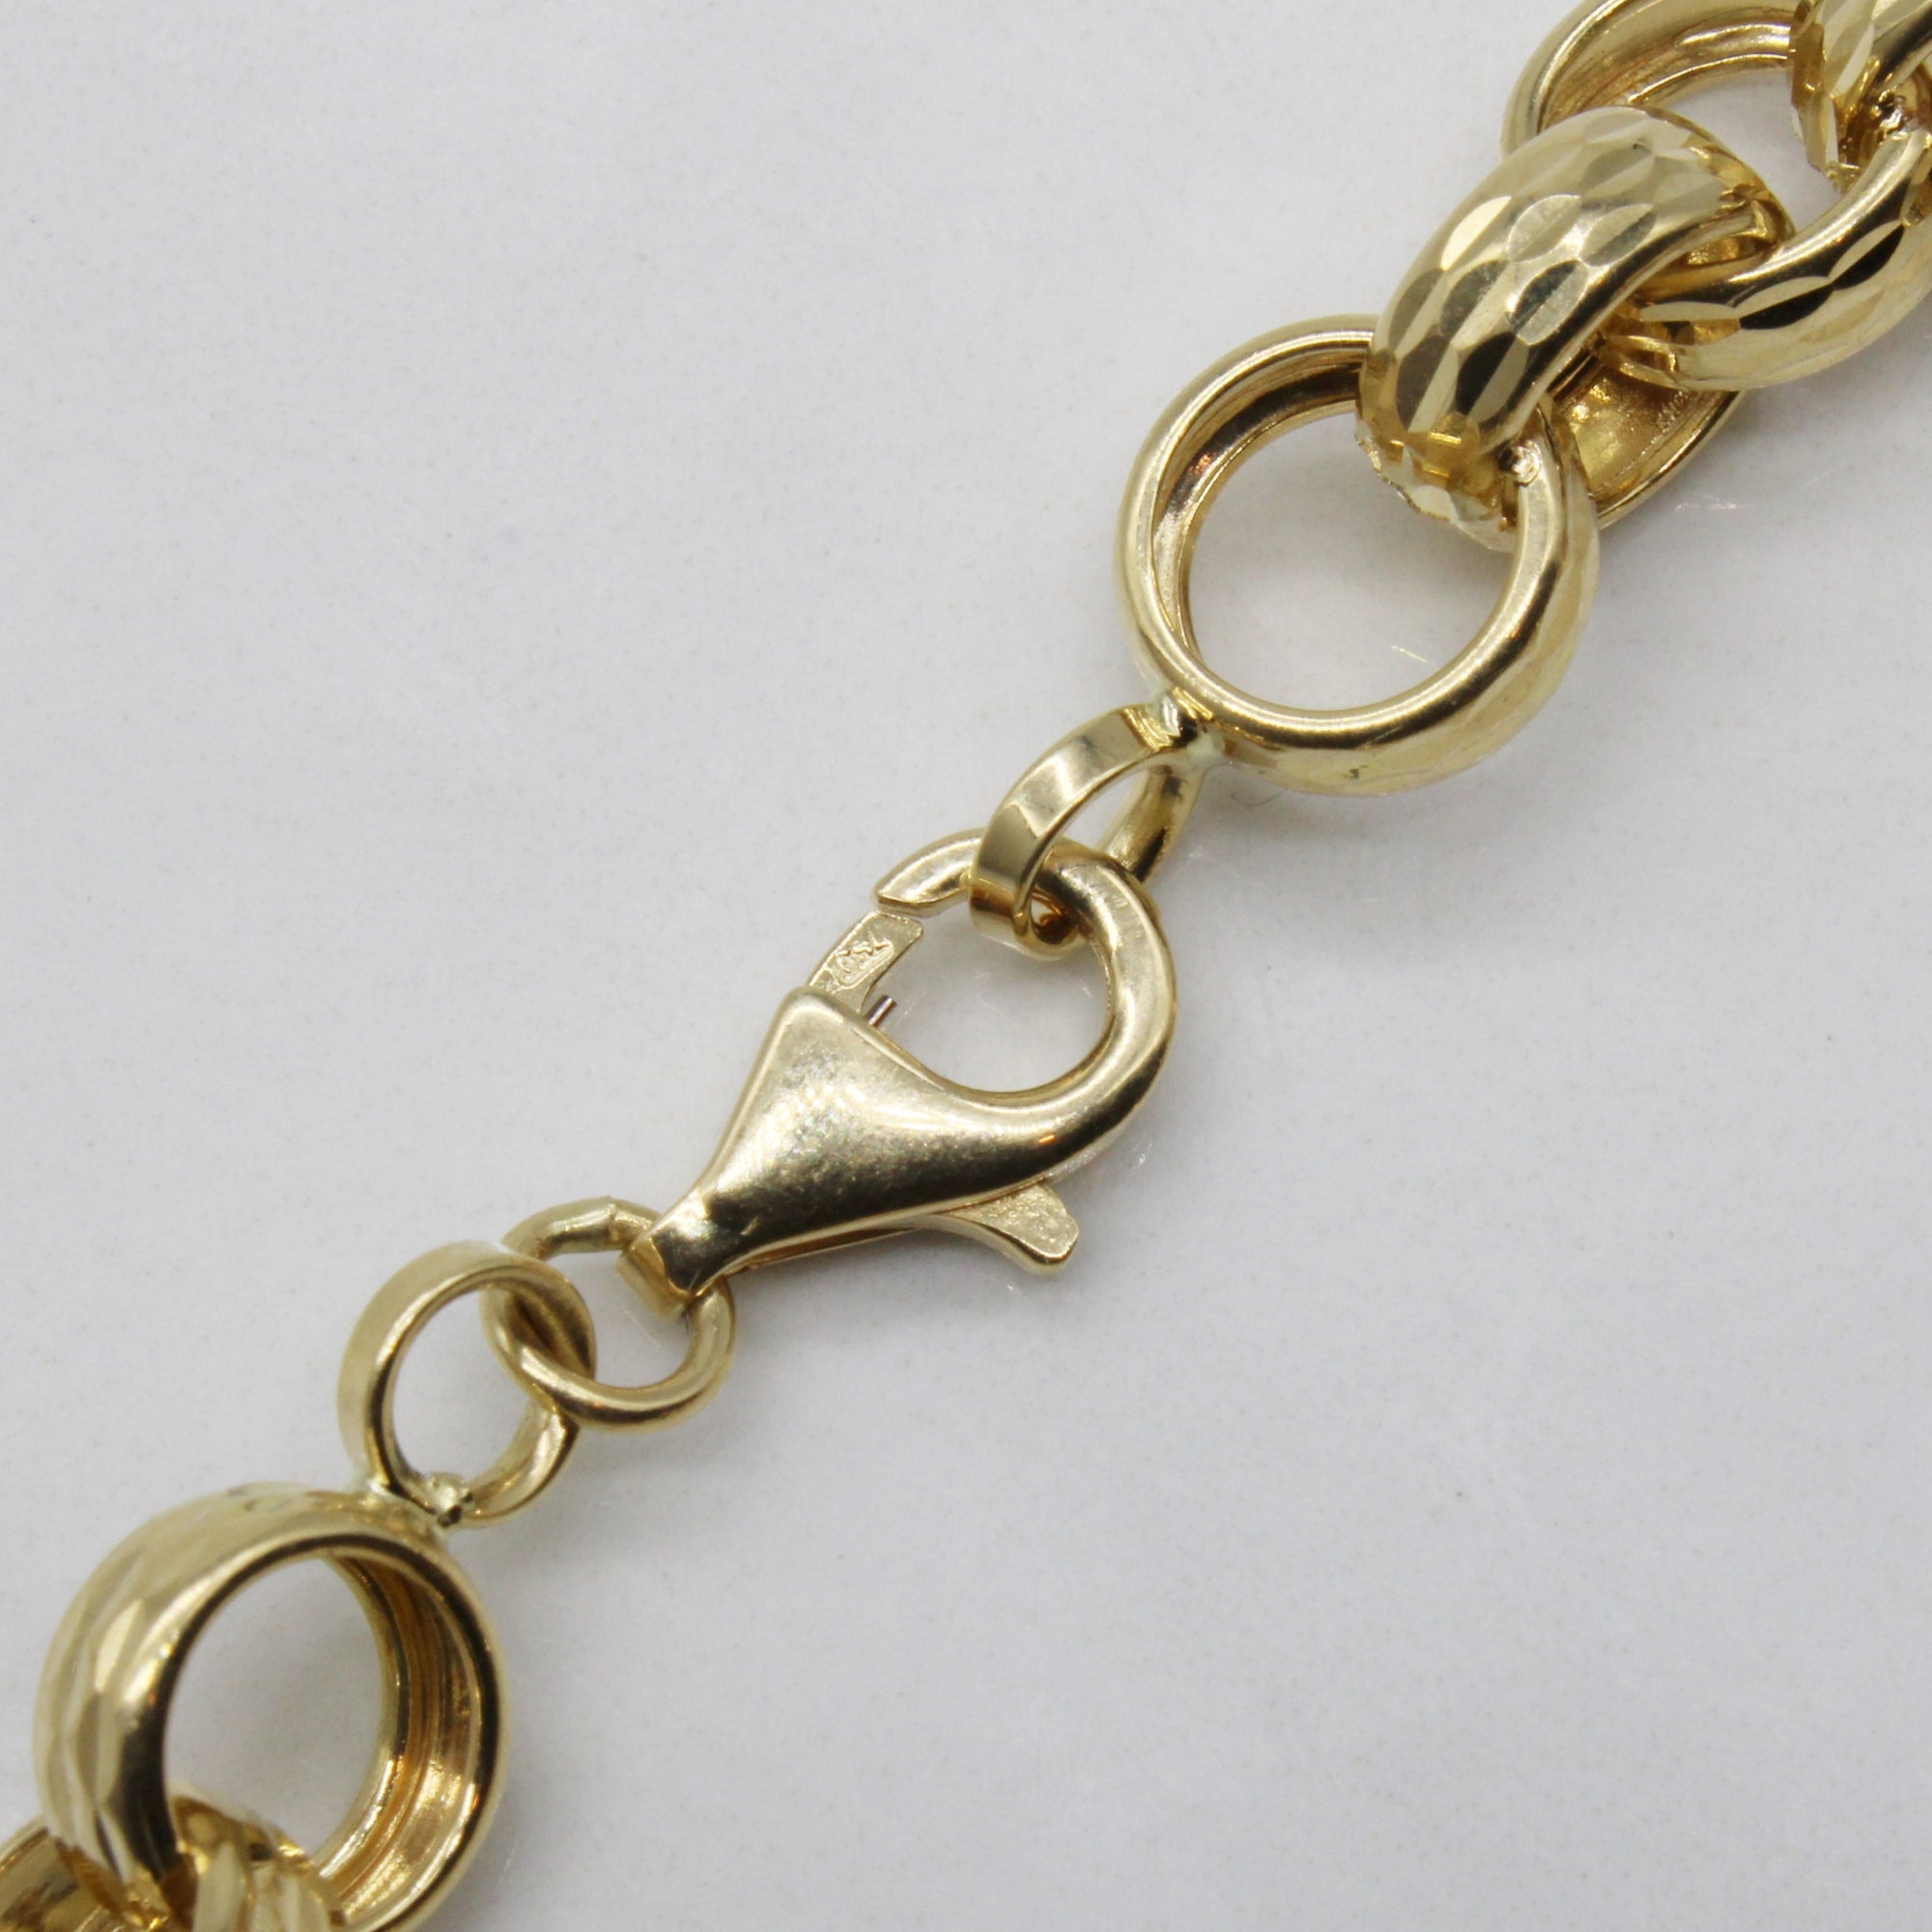 Yellow Gold Textured Link Bracelet | 7.25